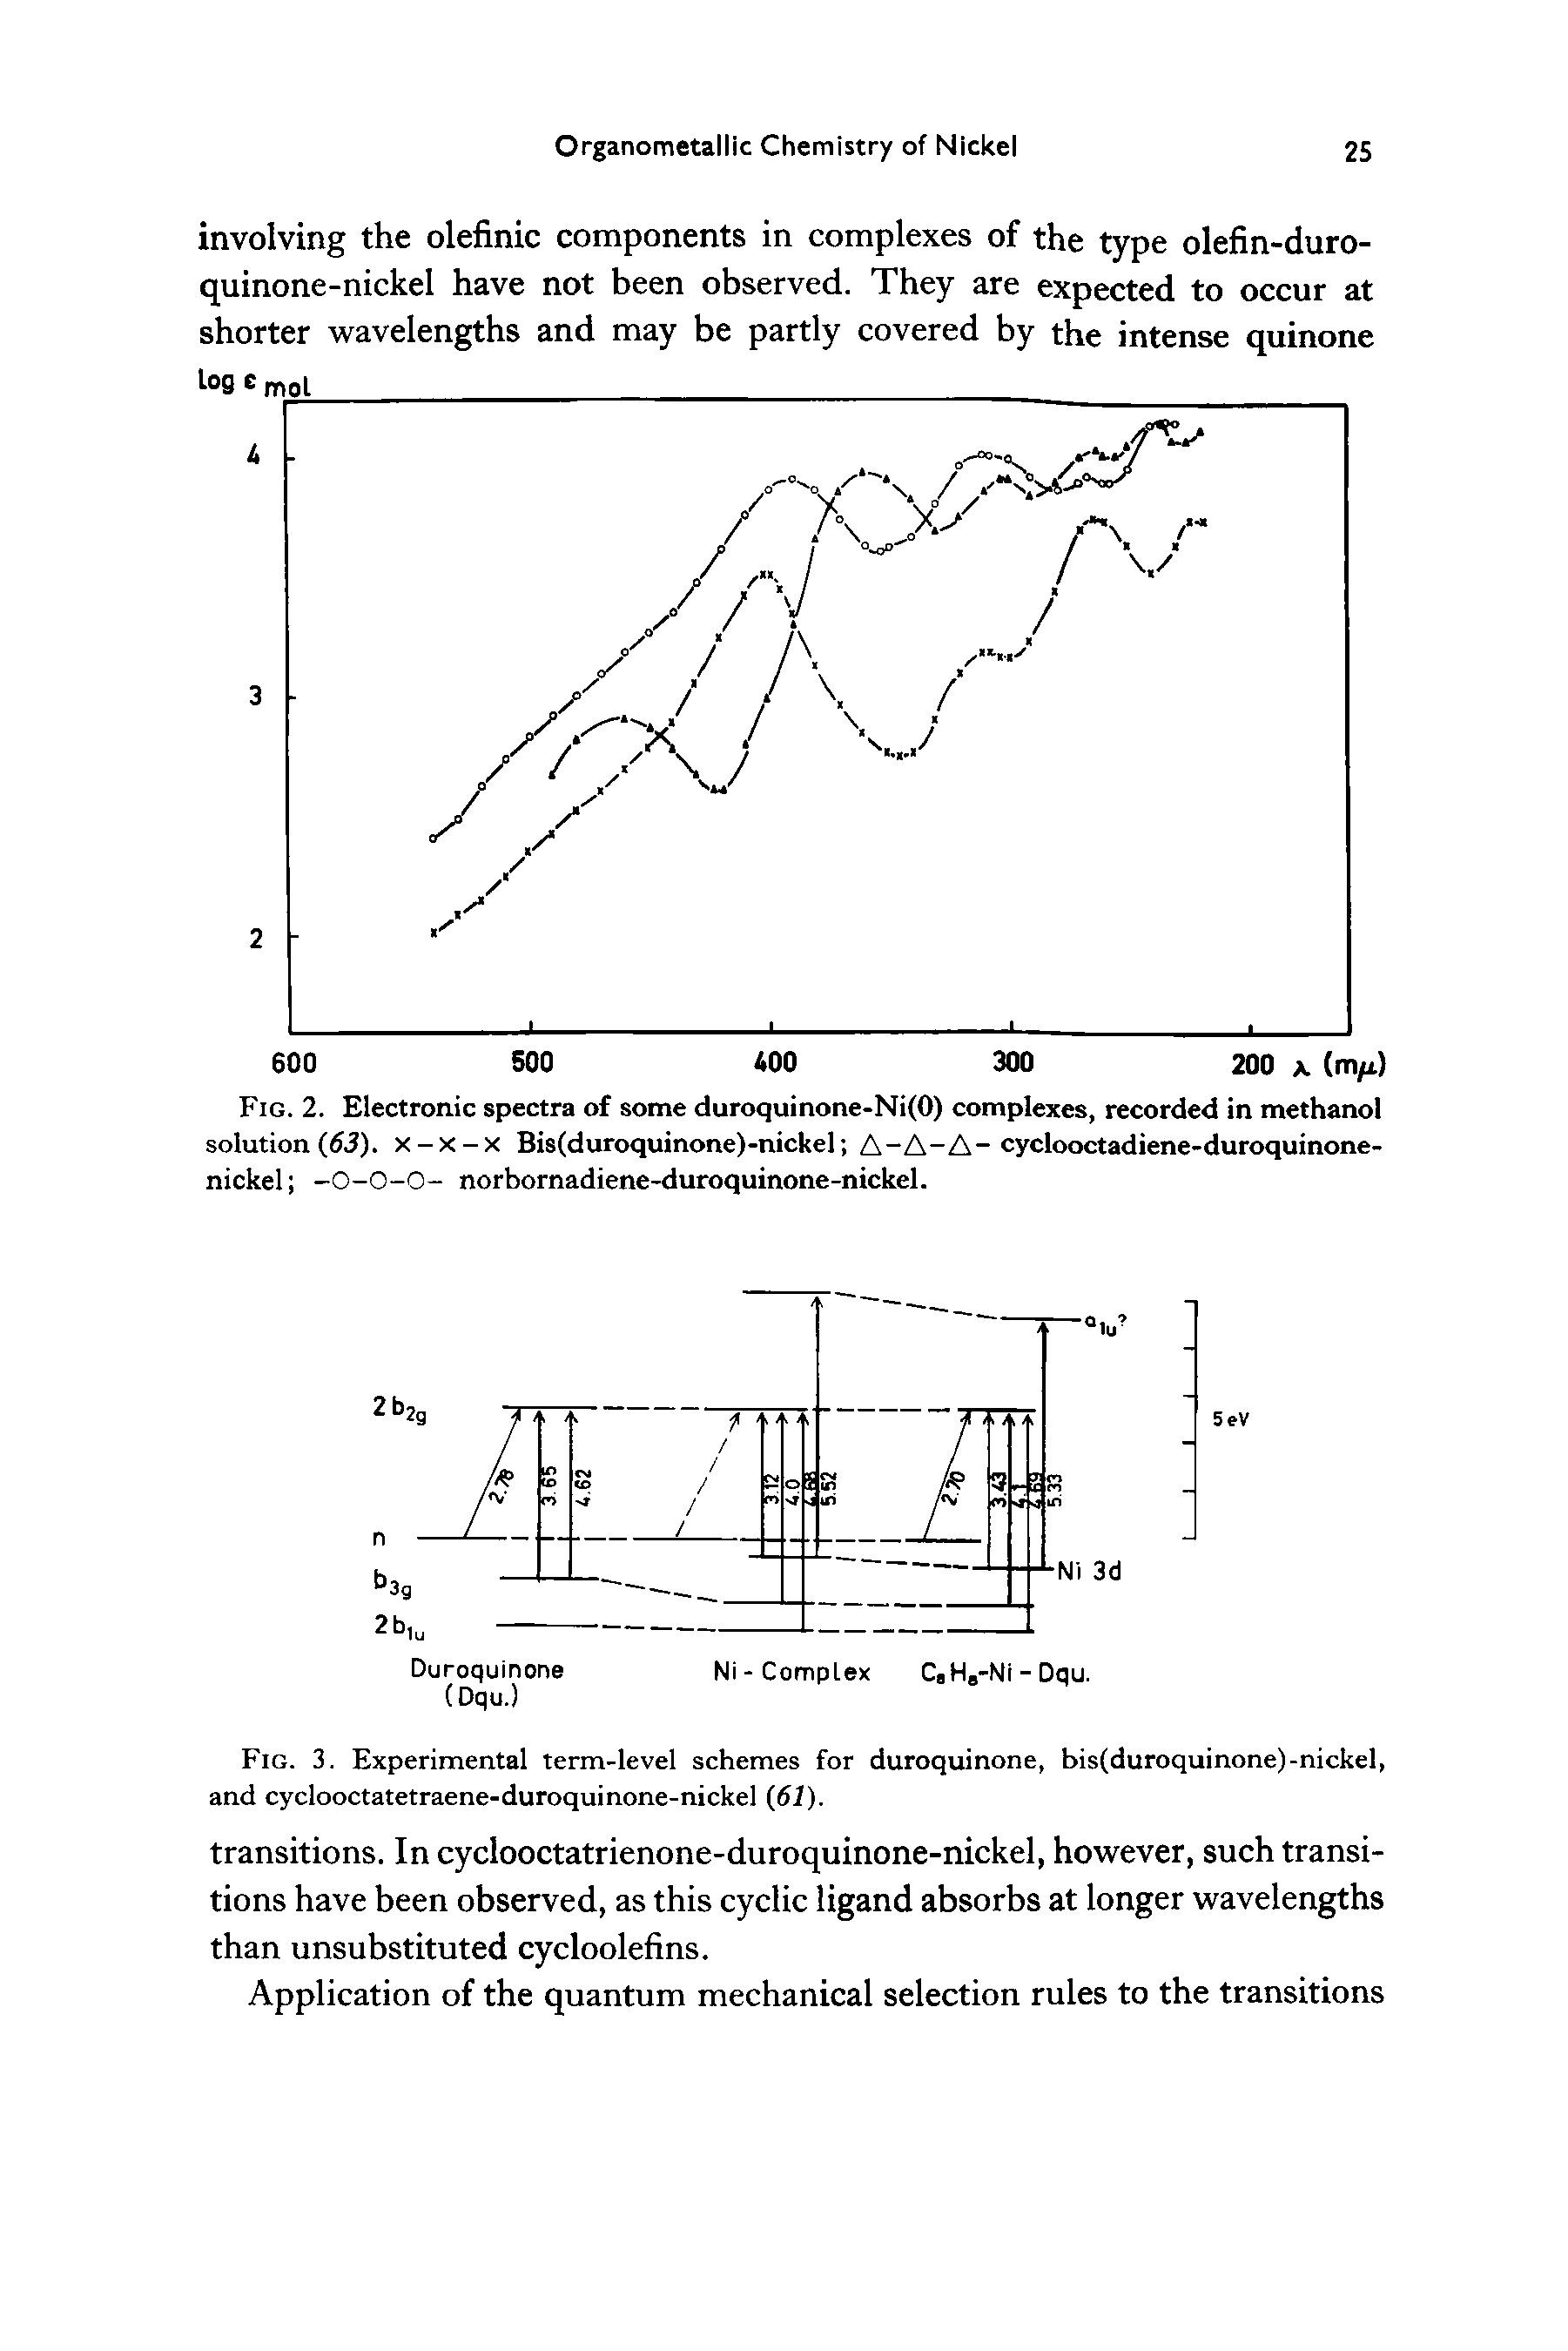 Fig. 3. Experimental term-level schemes for duroquinone, bis(duroquinone)-nickel, and cyclooctatetraene-duroquinone-nickel (61).